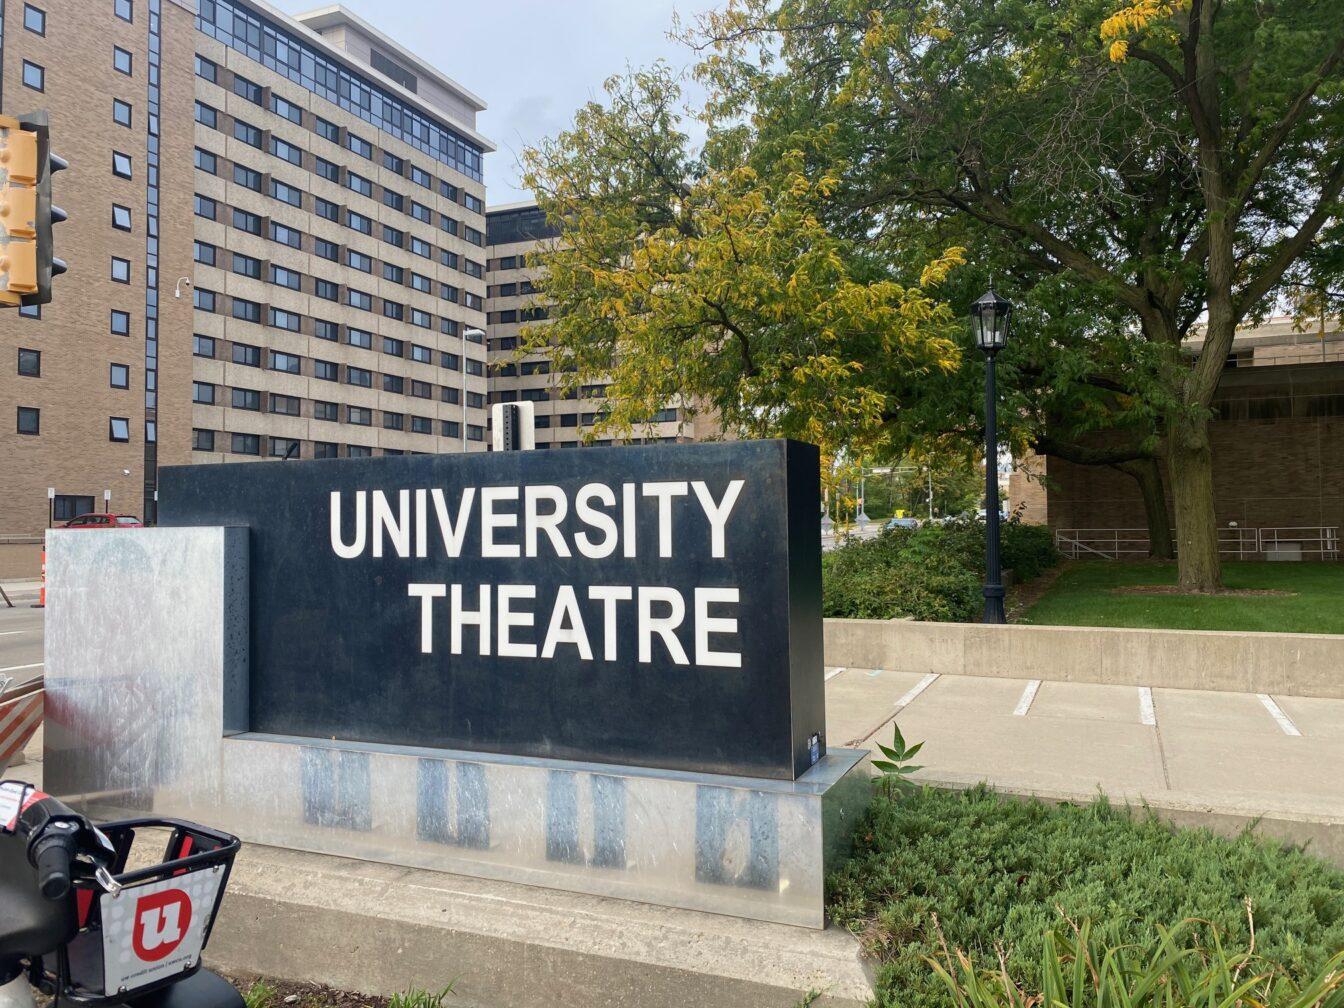 University Theater sign